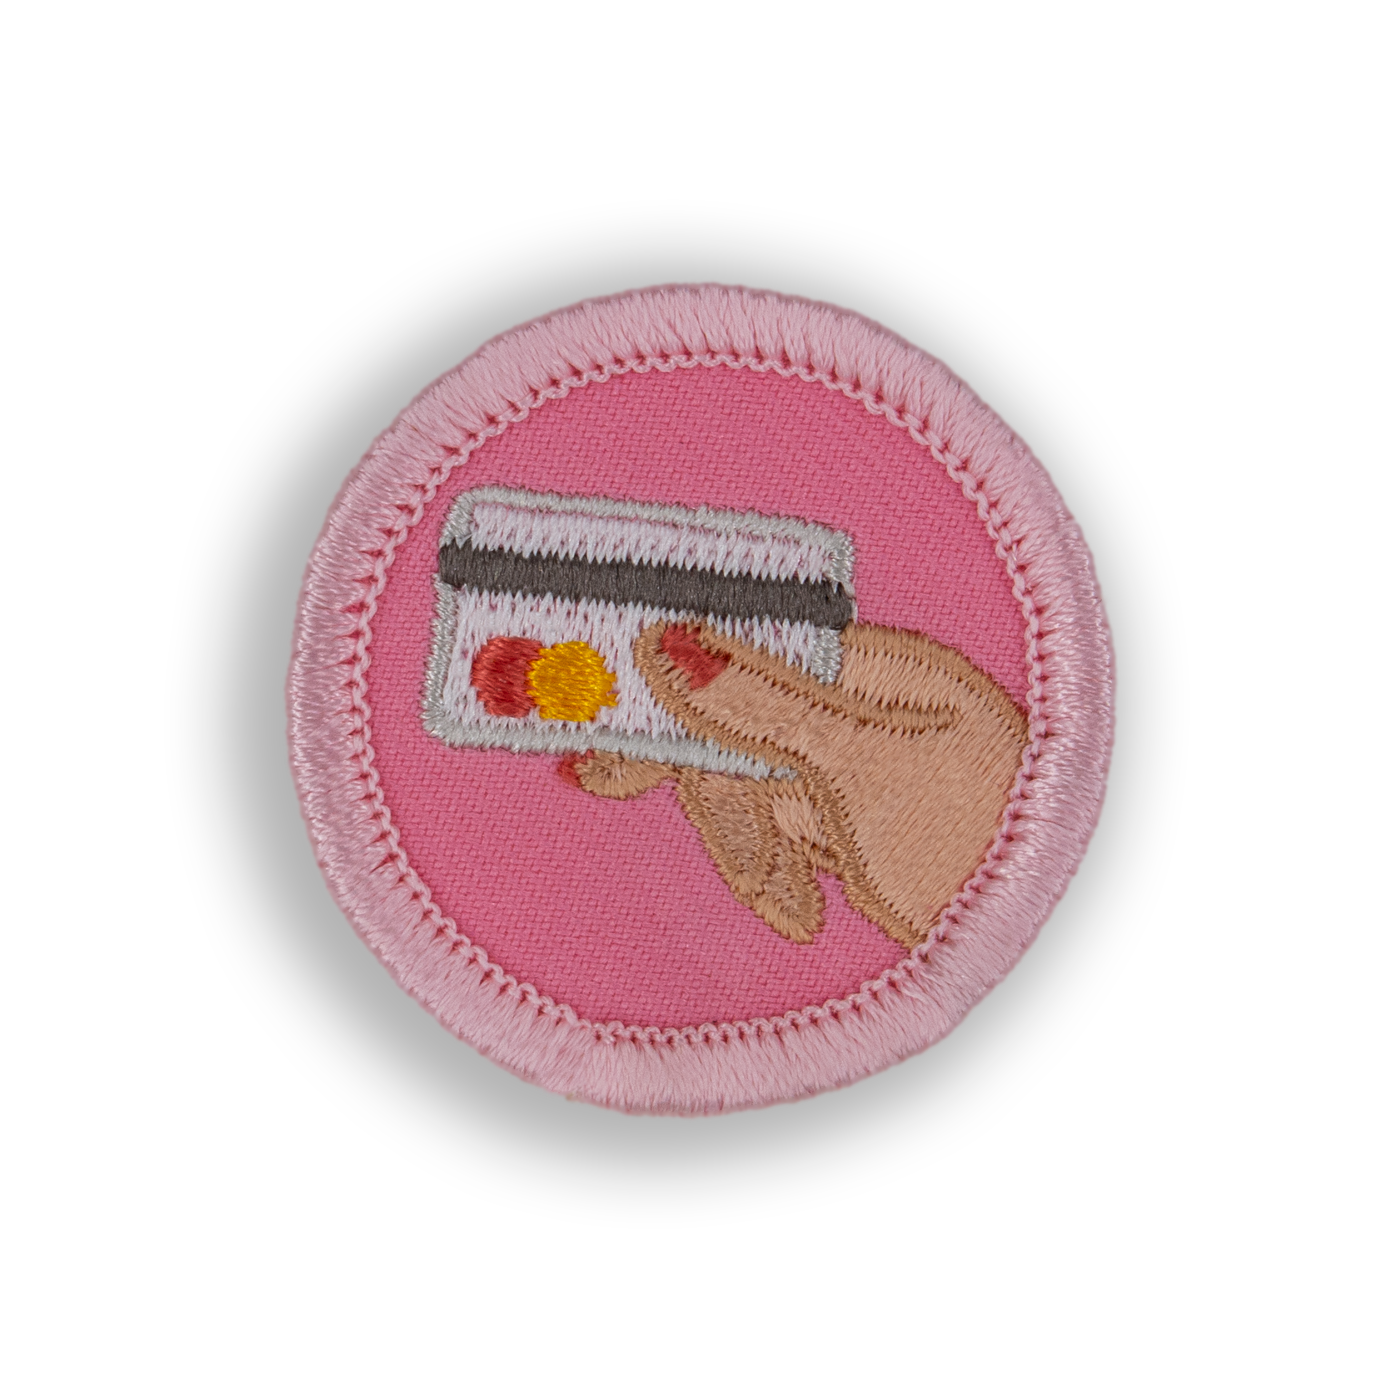 Hooked on Credit Patch | Demerit Wear - Fake Merit Badges